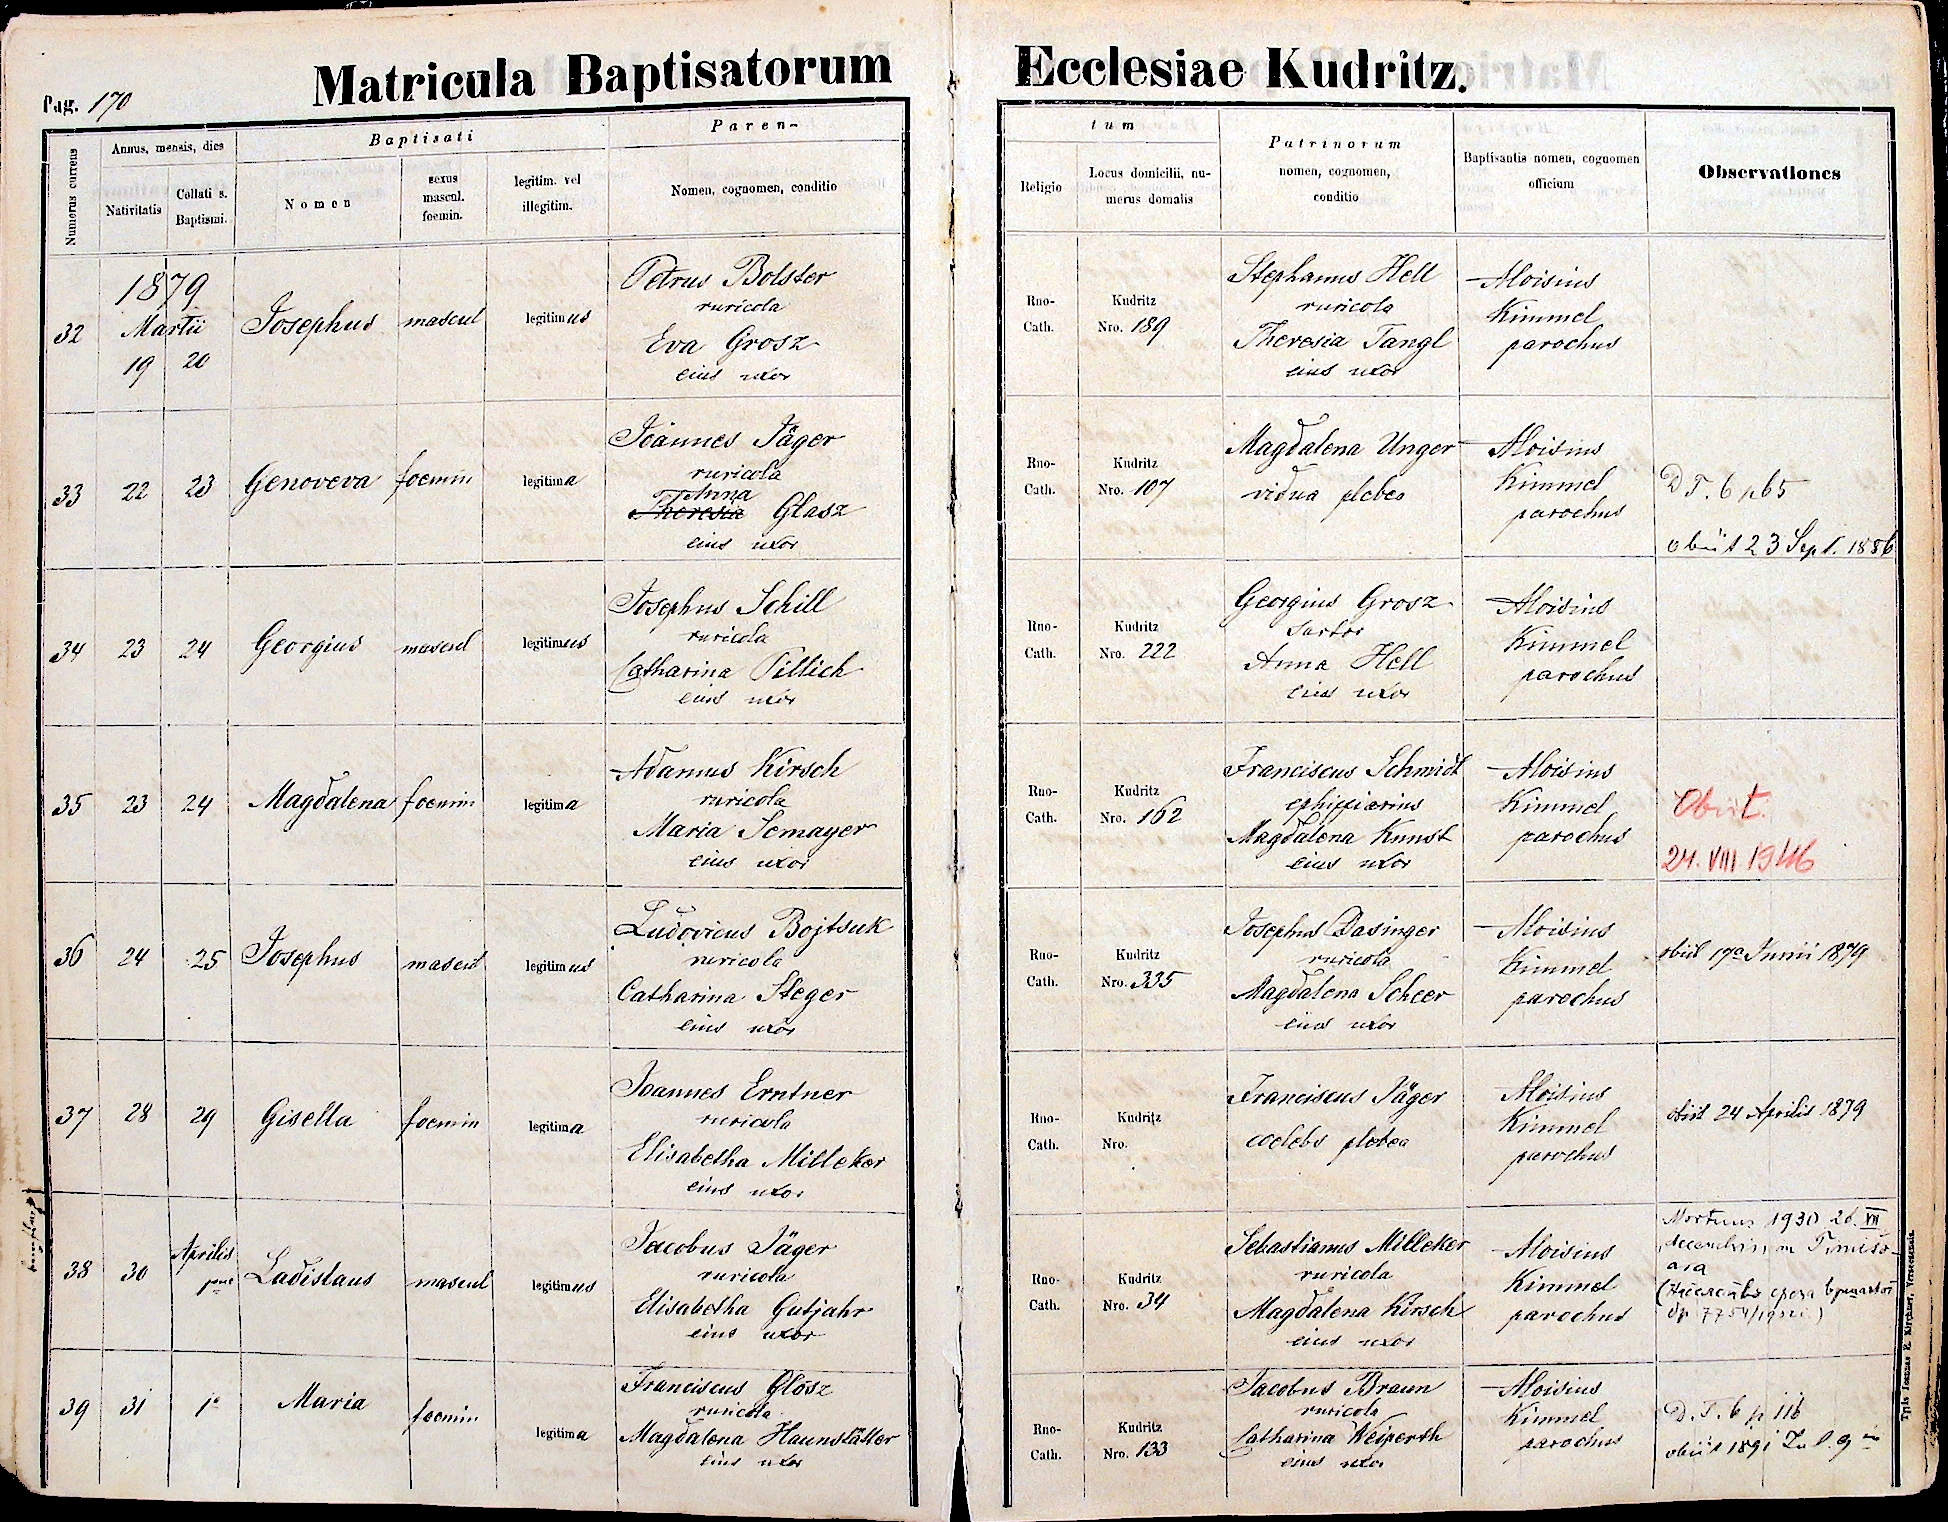 images/church_records/BIRTHS/1870-1879B/1879/170